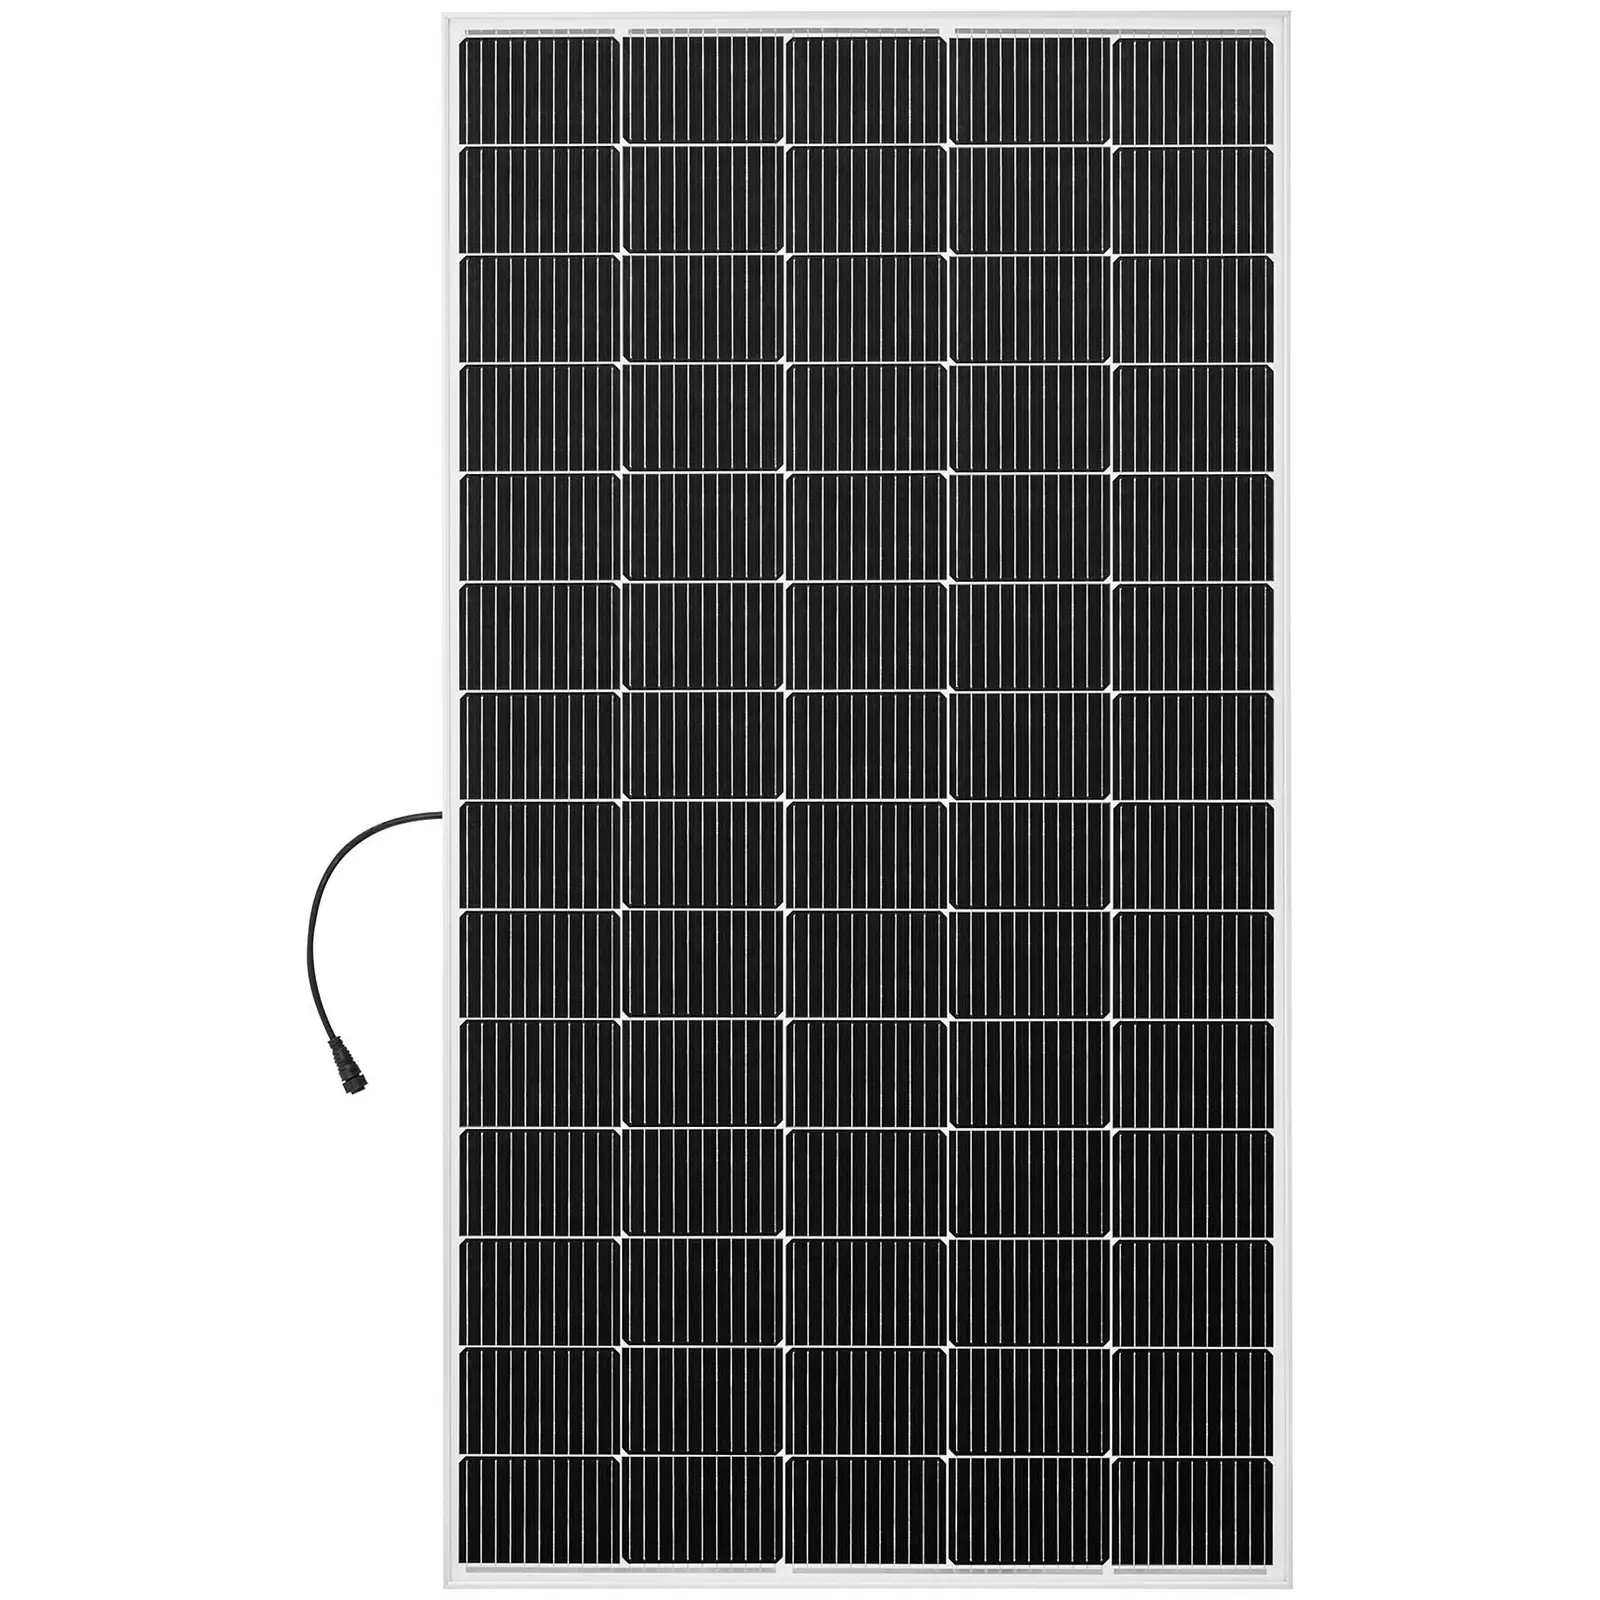 Kit solar para varanda - 750 W - 2 painéis monocristalinos - pronto a ligar